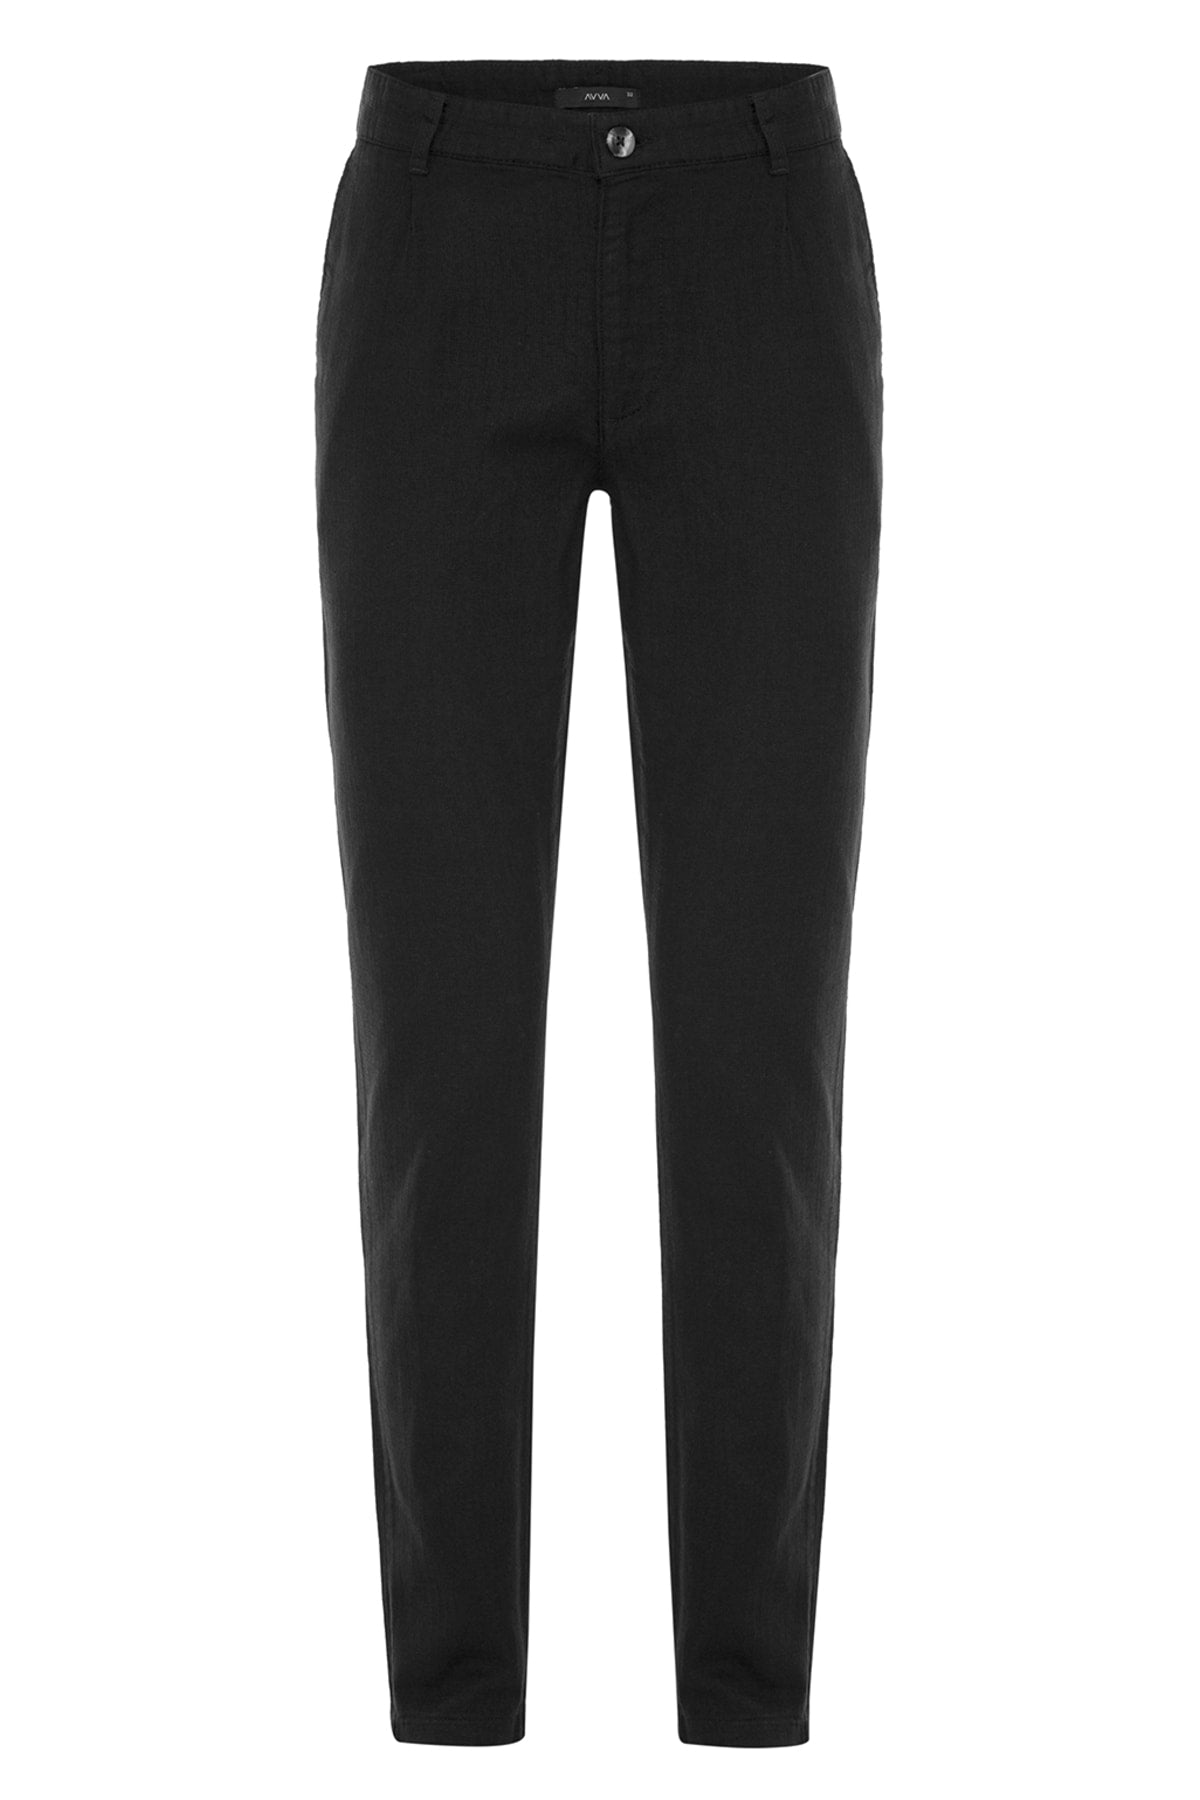 Men's Black Side Comfort Slim Fit Pants E003020